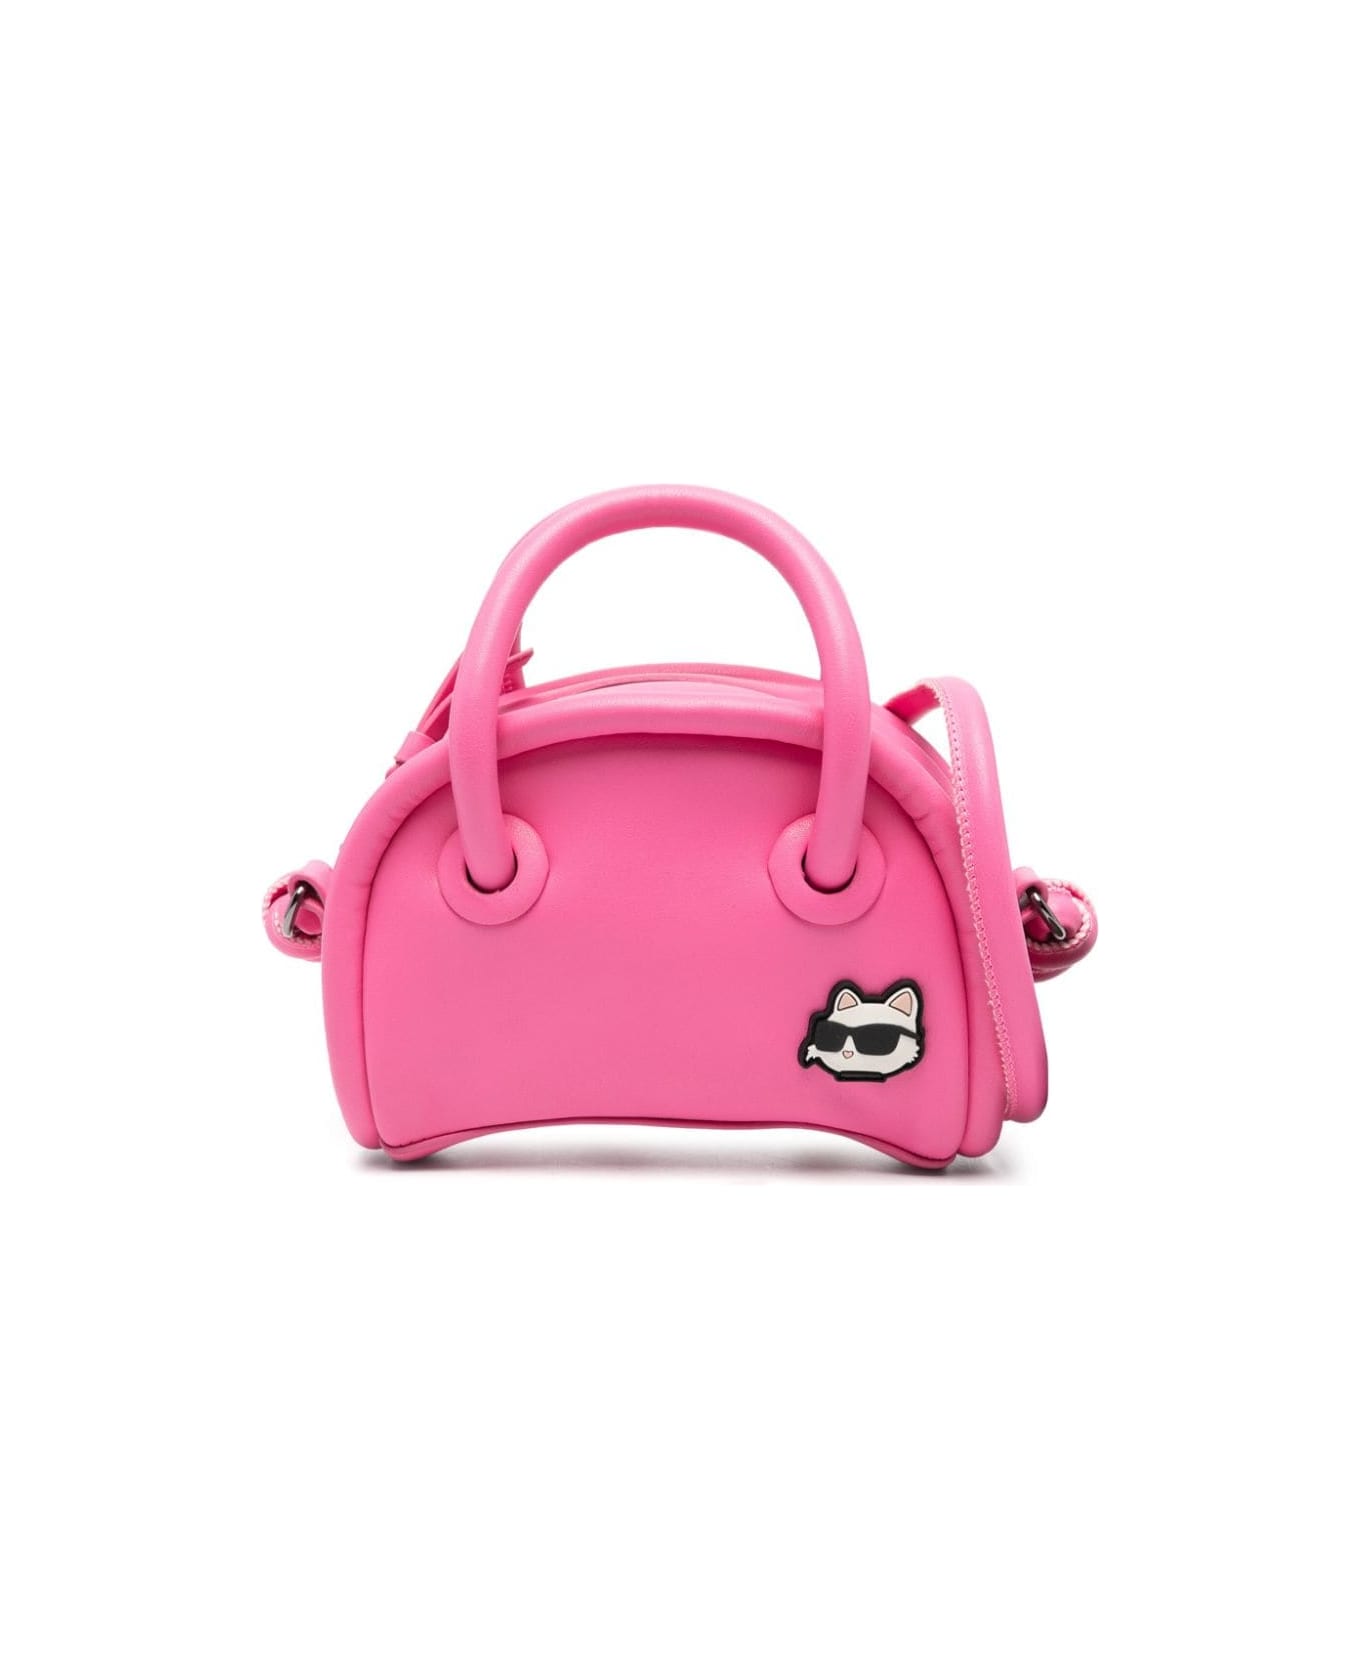 Karl Lagerfeld Kids Borsa A Spalla Con Placca Logo - Pink